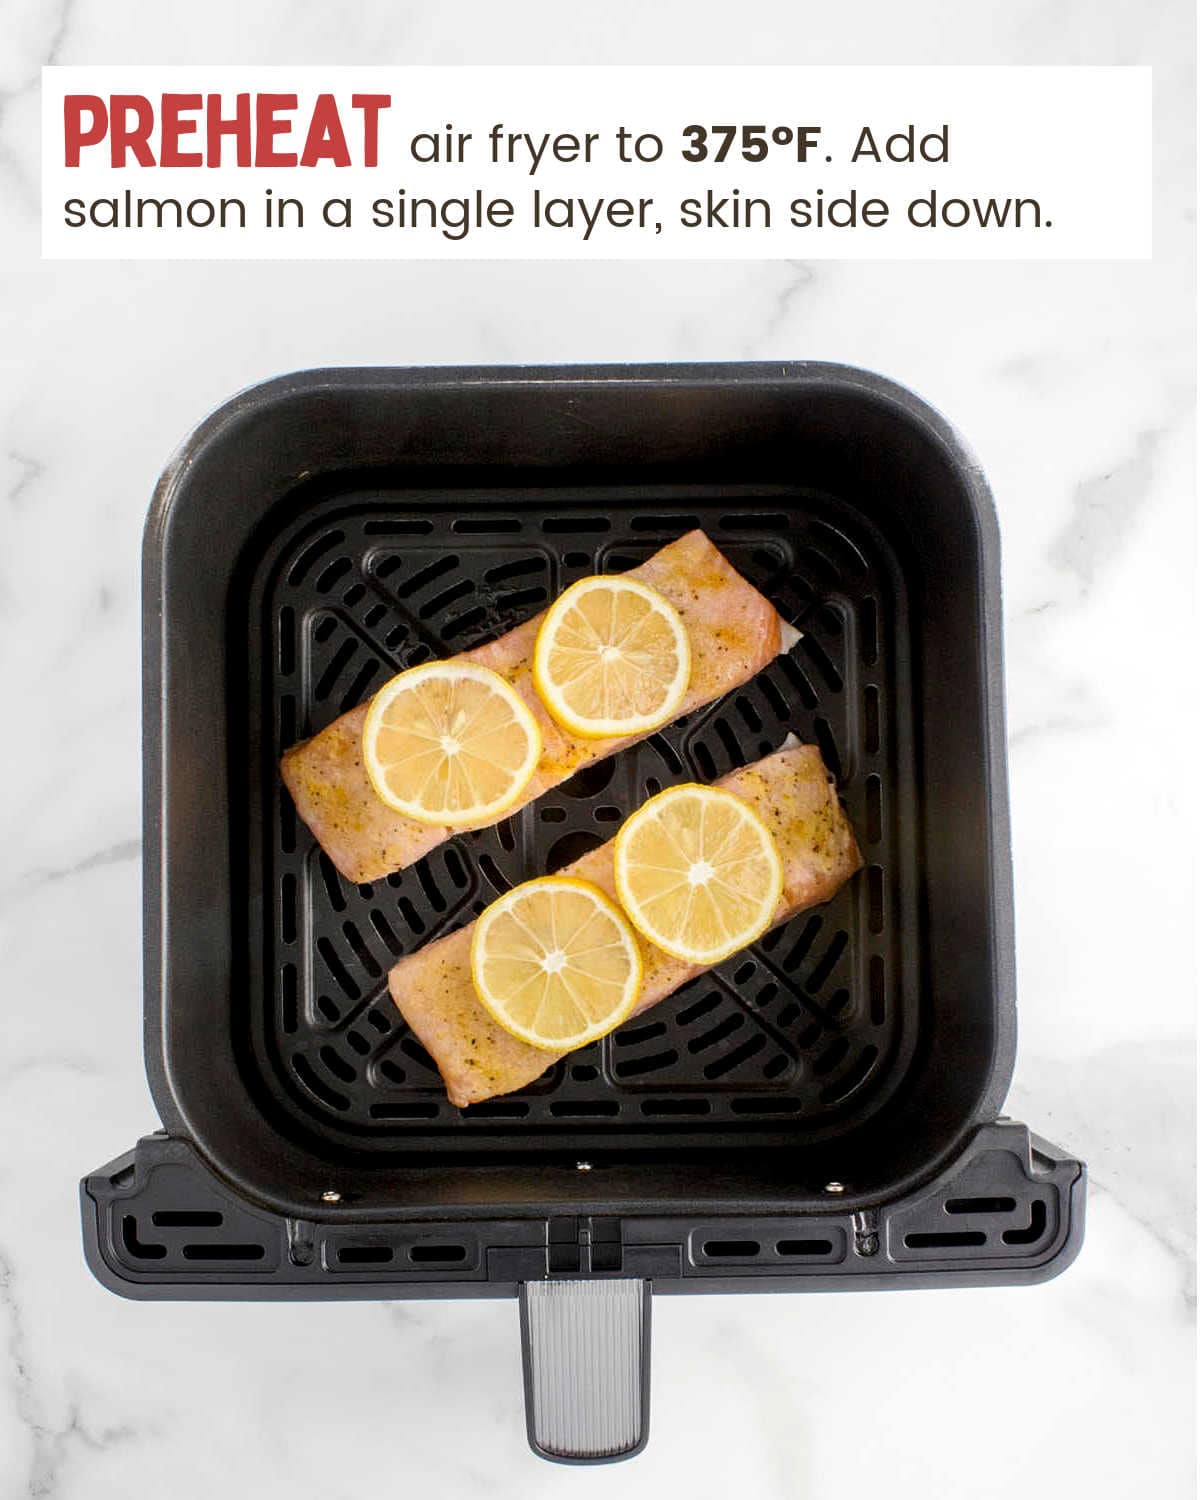 Lemon Pepper Salmon in an air fryer.